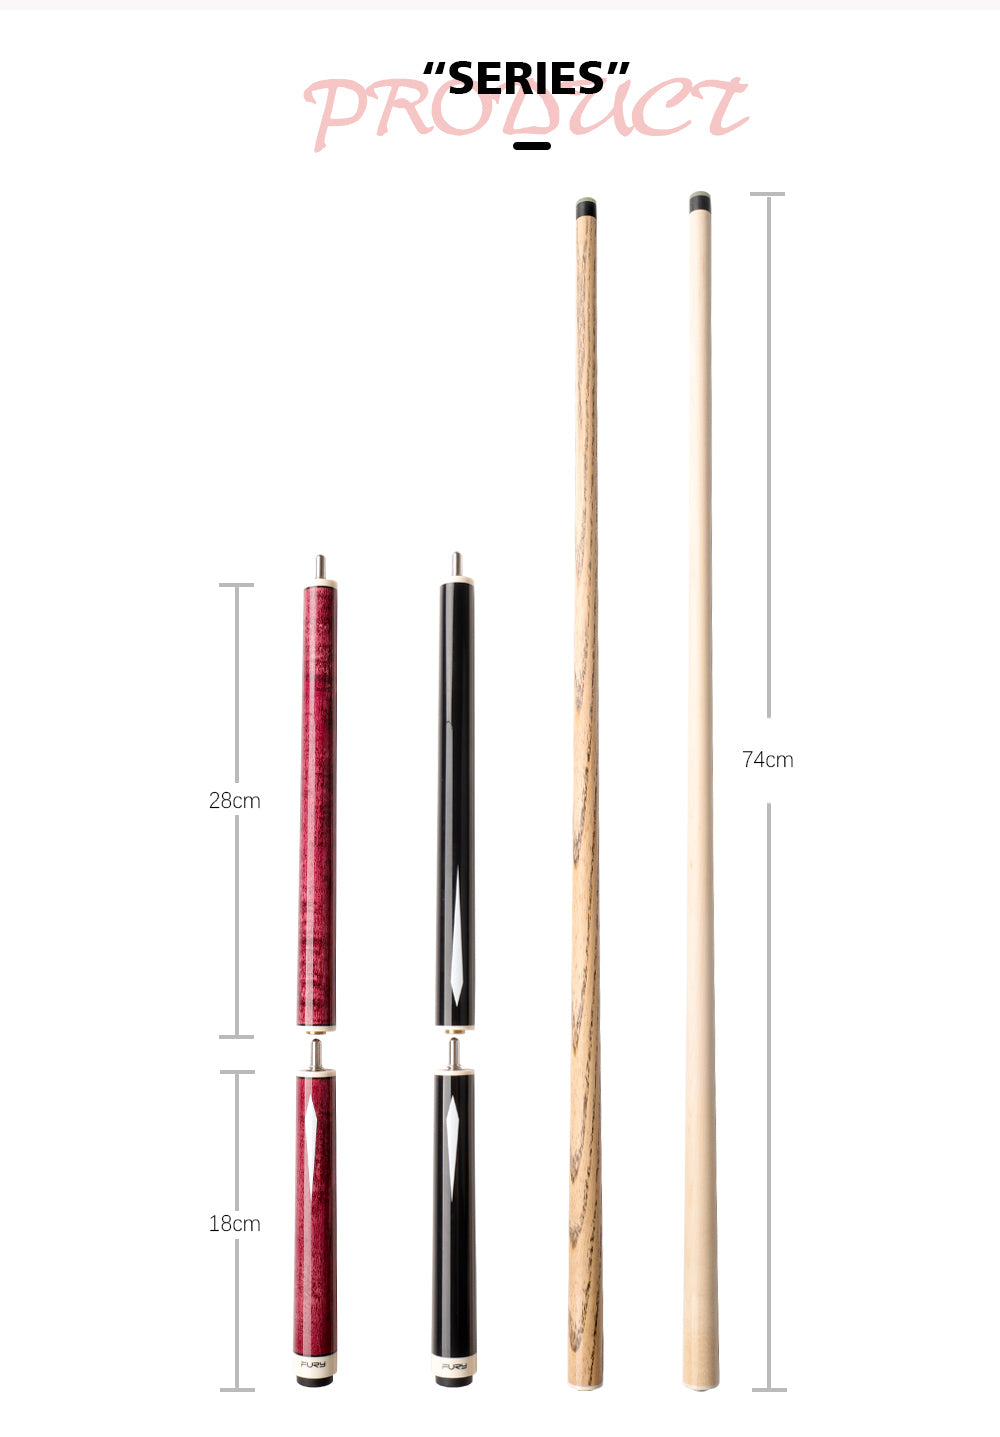 FURY JPS 3 Pieces Billiard Jump Cue Stick Ash Maple Shaft 13.8mm H5 Green Glass Fiber Tip Billar Cue Kit for Athlete